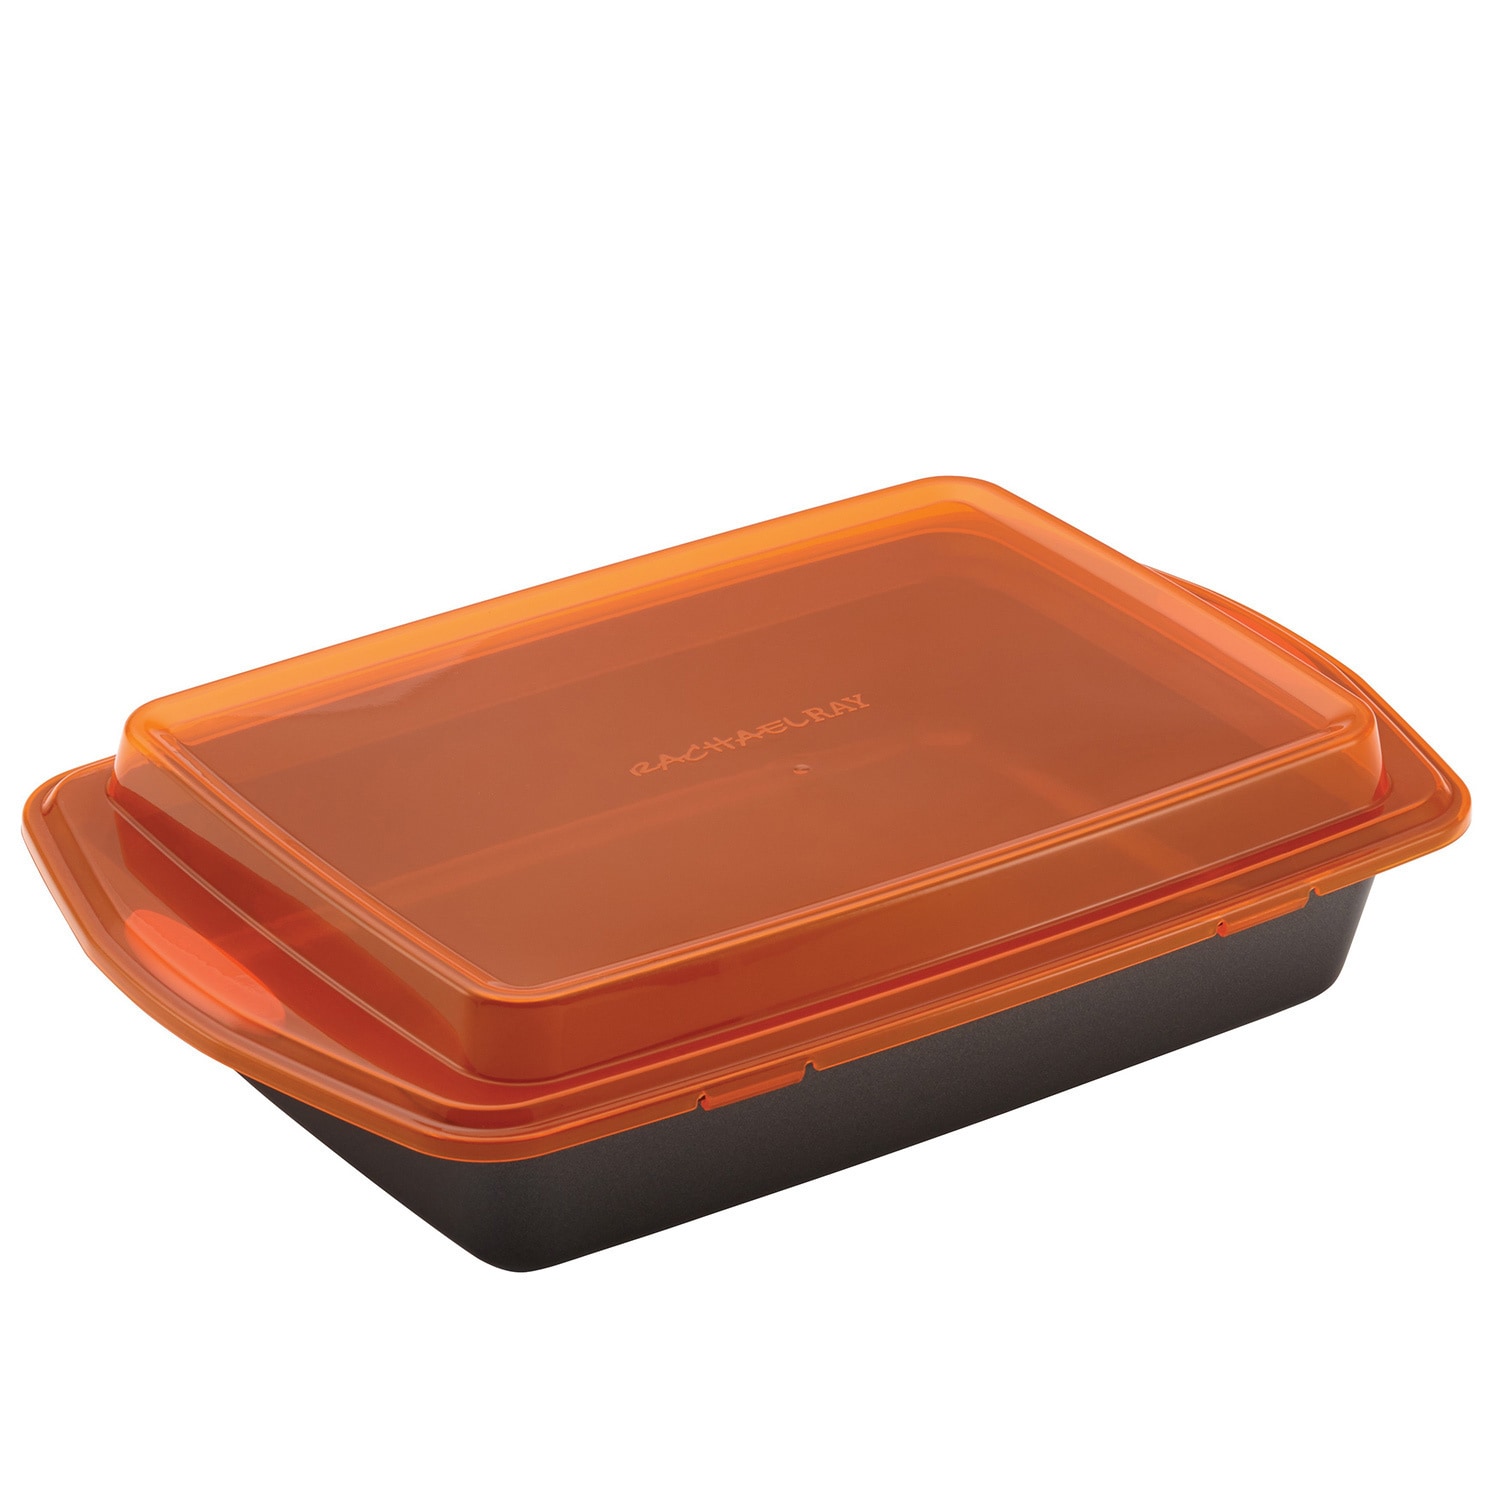 https://ak1.ostkcdn.com/images/products/8891291/Rachael-Ray-Nonstick-Bakeware-9-x-13-inch-Grey-with-Orange-Lid-and-Handles-Covered-Cake-Pan-28c98edc-ecdb-448e-adae-9b56e568cf63.jpg